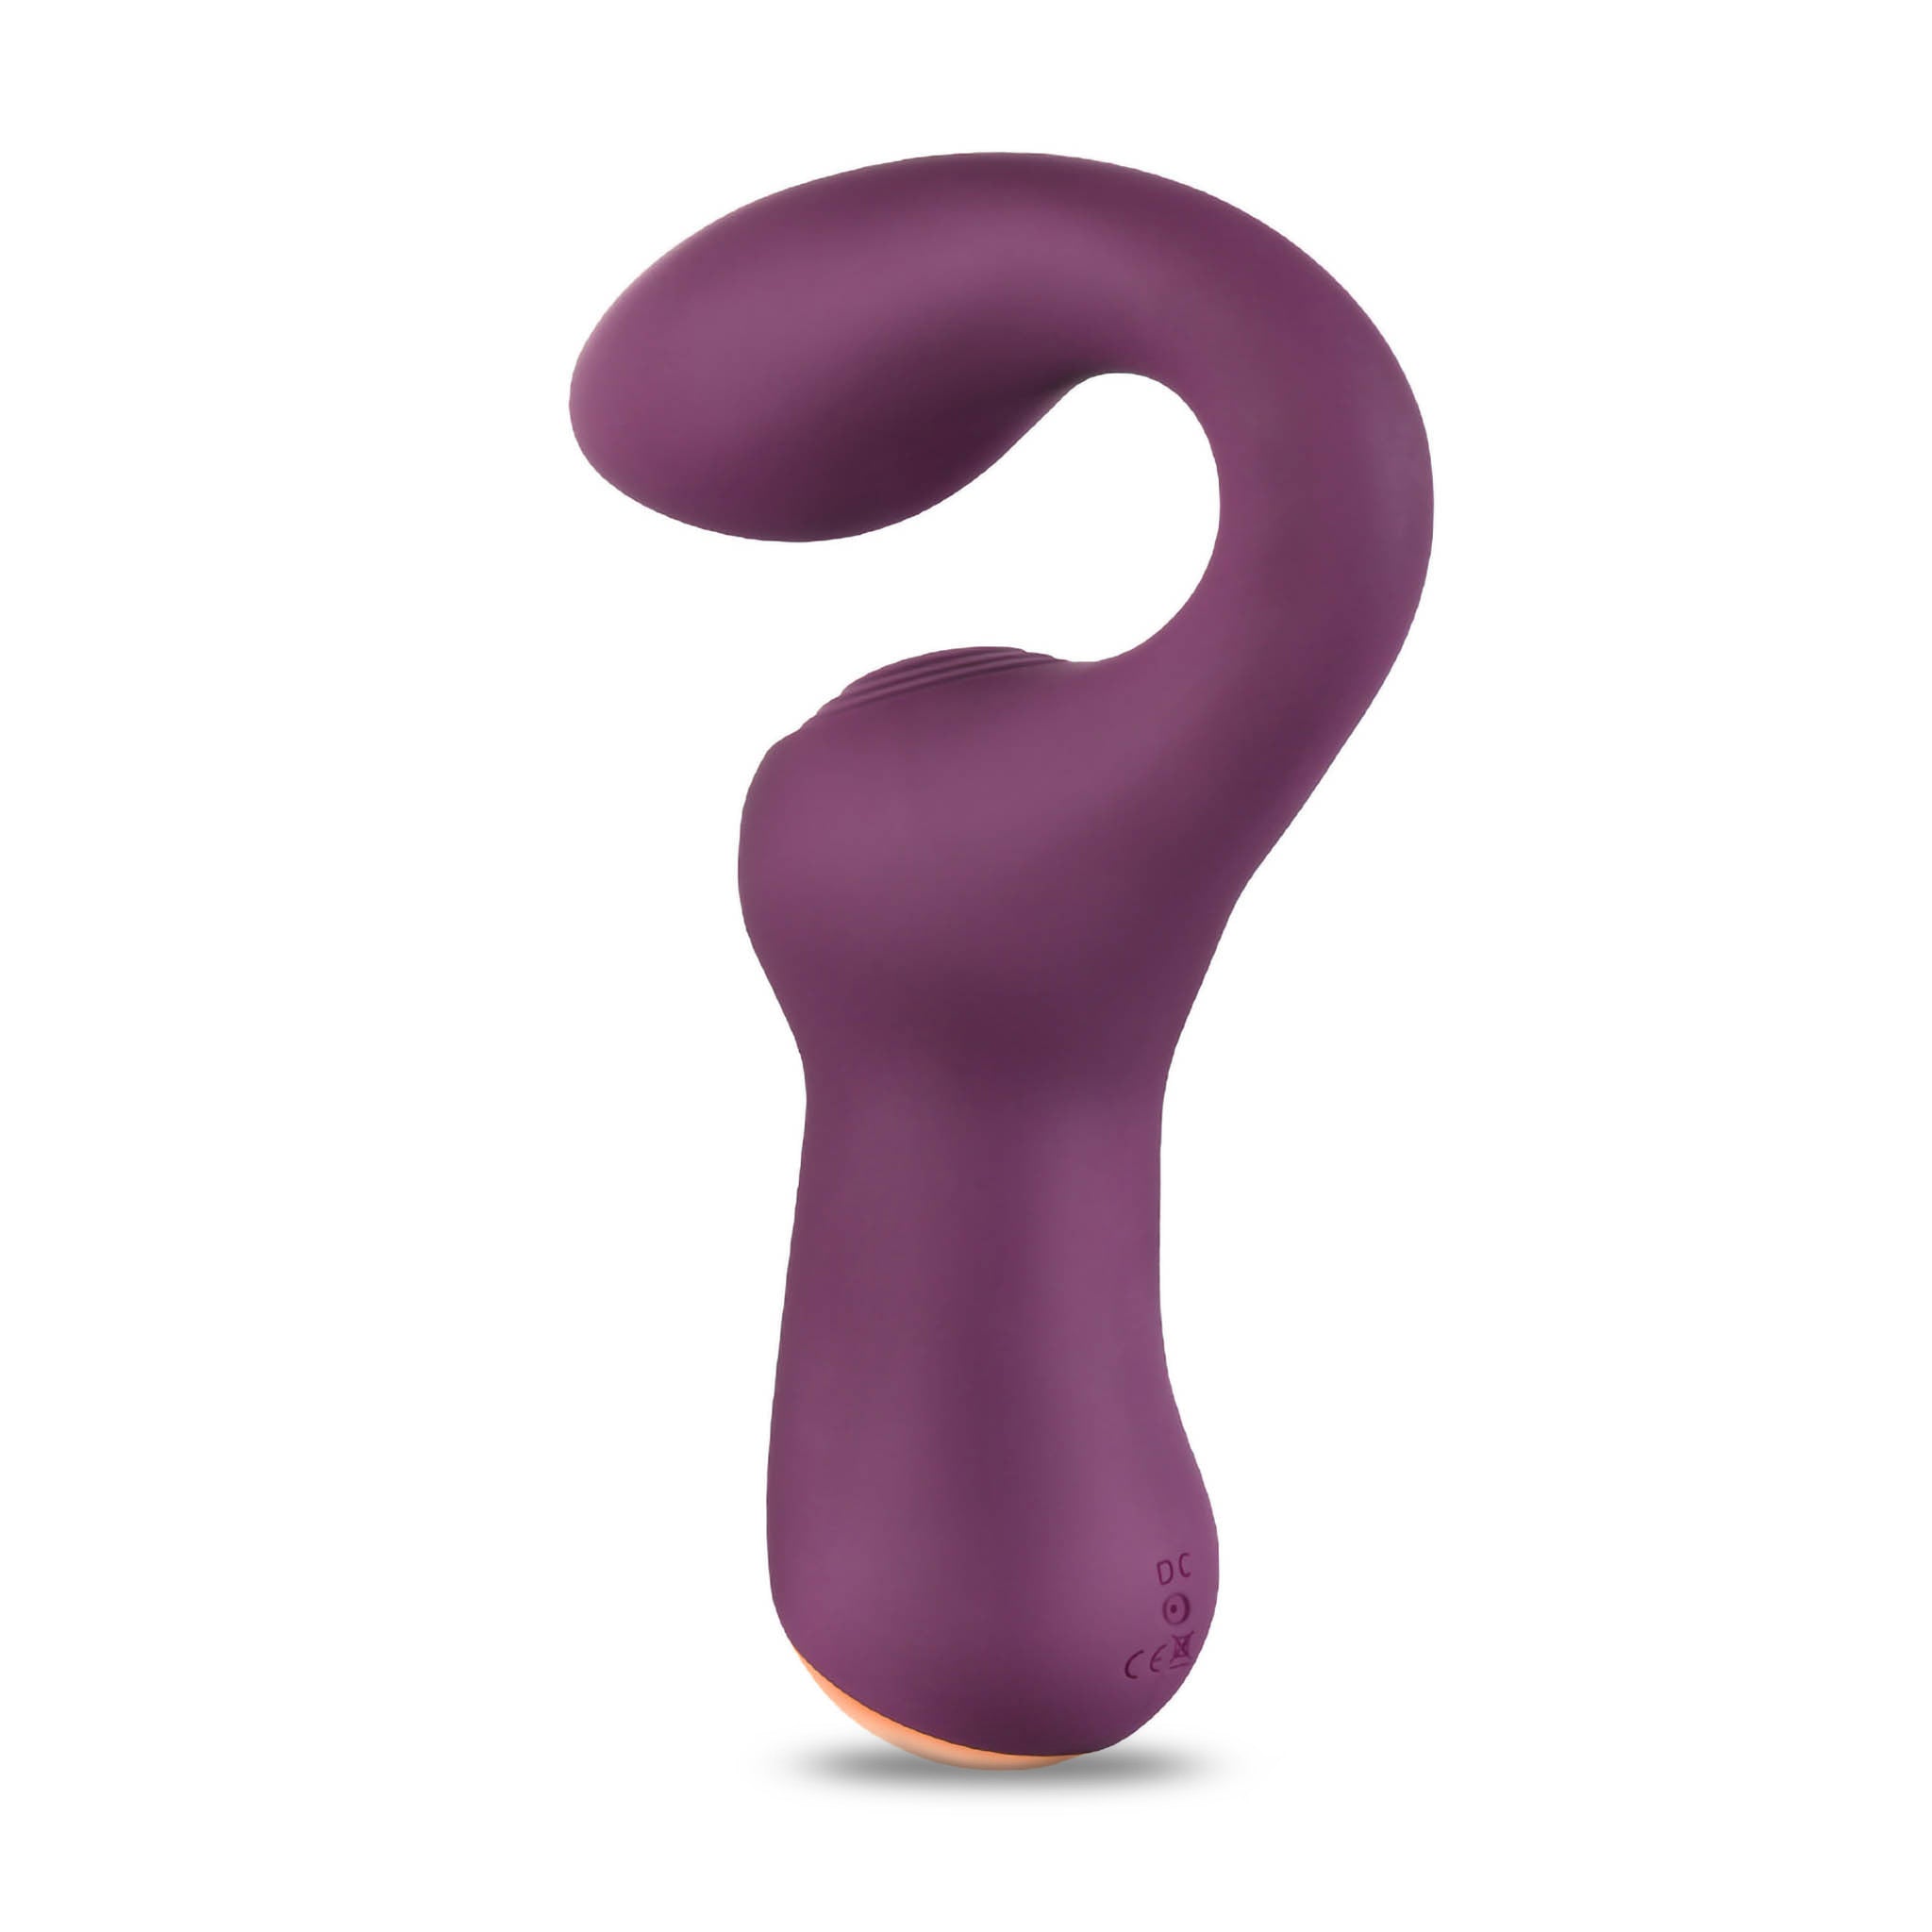 Dual Action G-spot Clitoral Massager Vibrator Stimulator Tickler Female Sex Toys